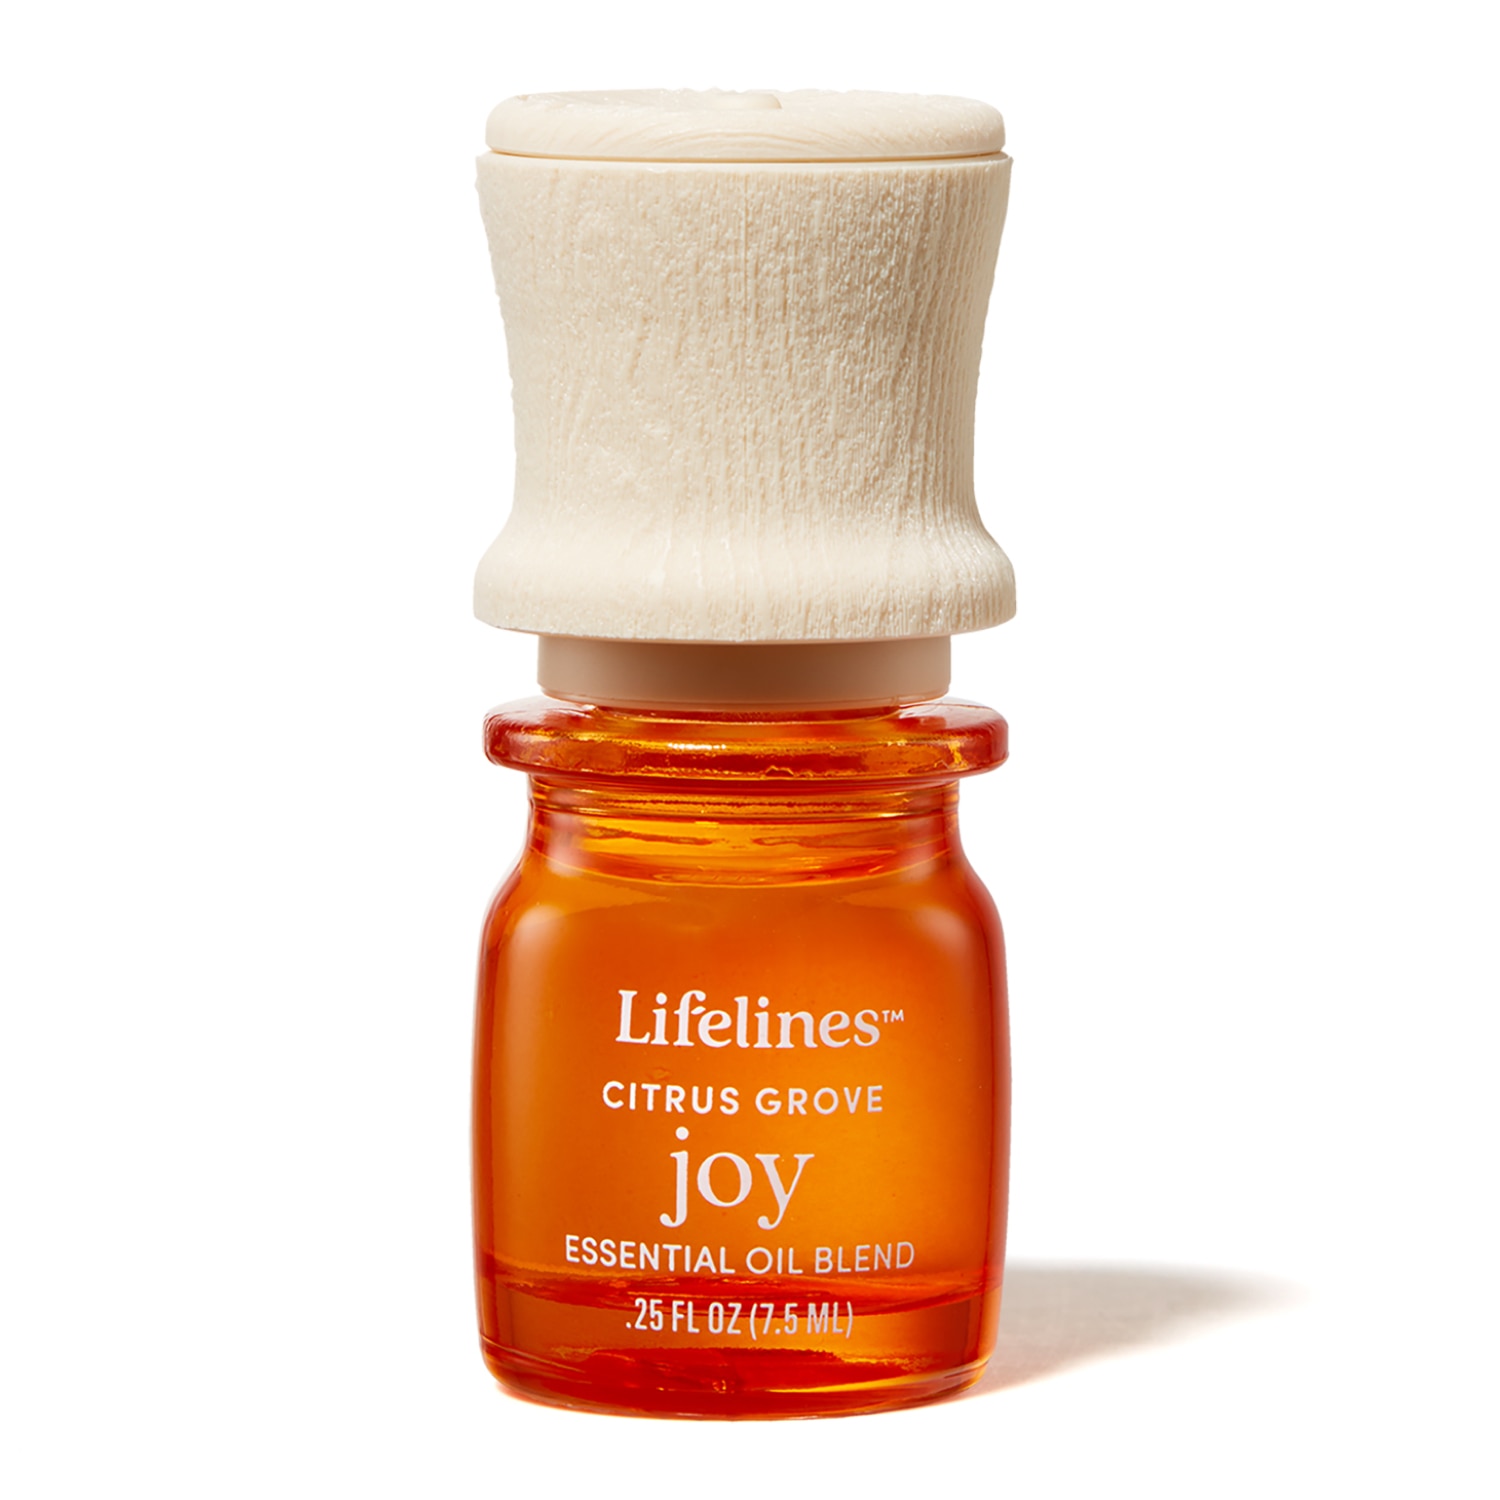 Lifelines Essential Oil Blend 7.5ml-Joy